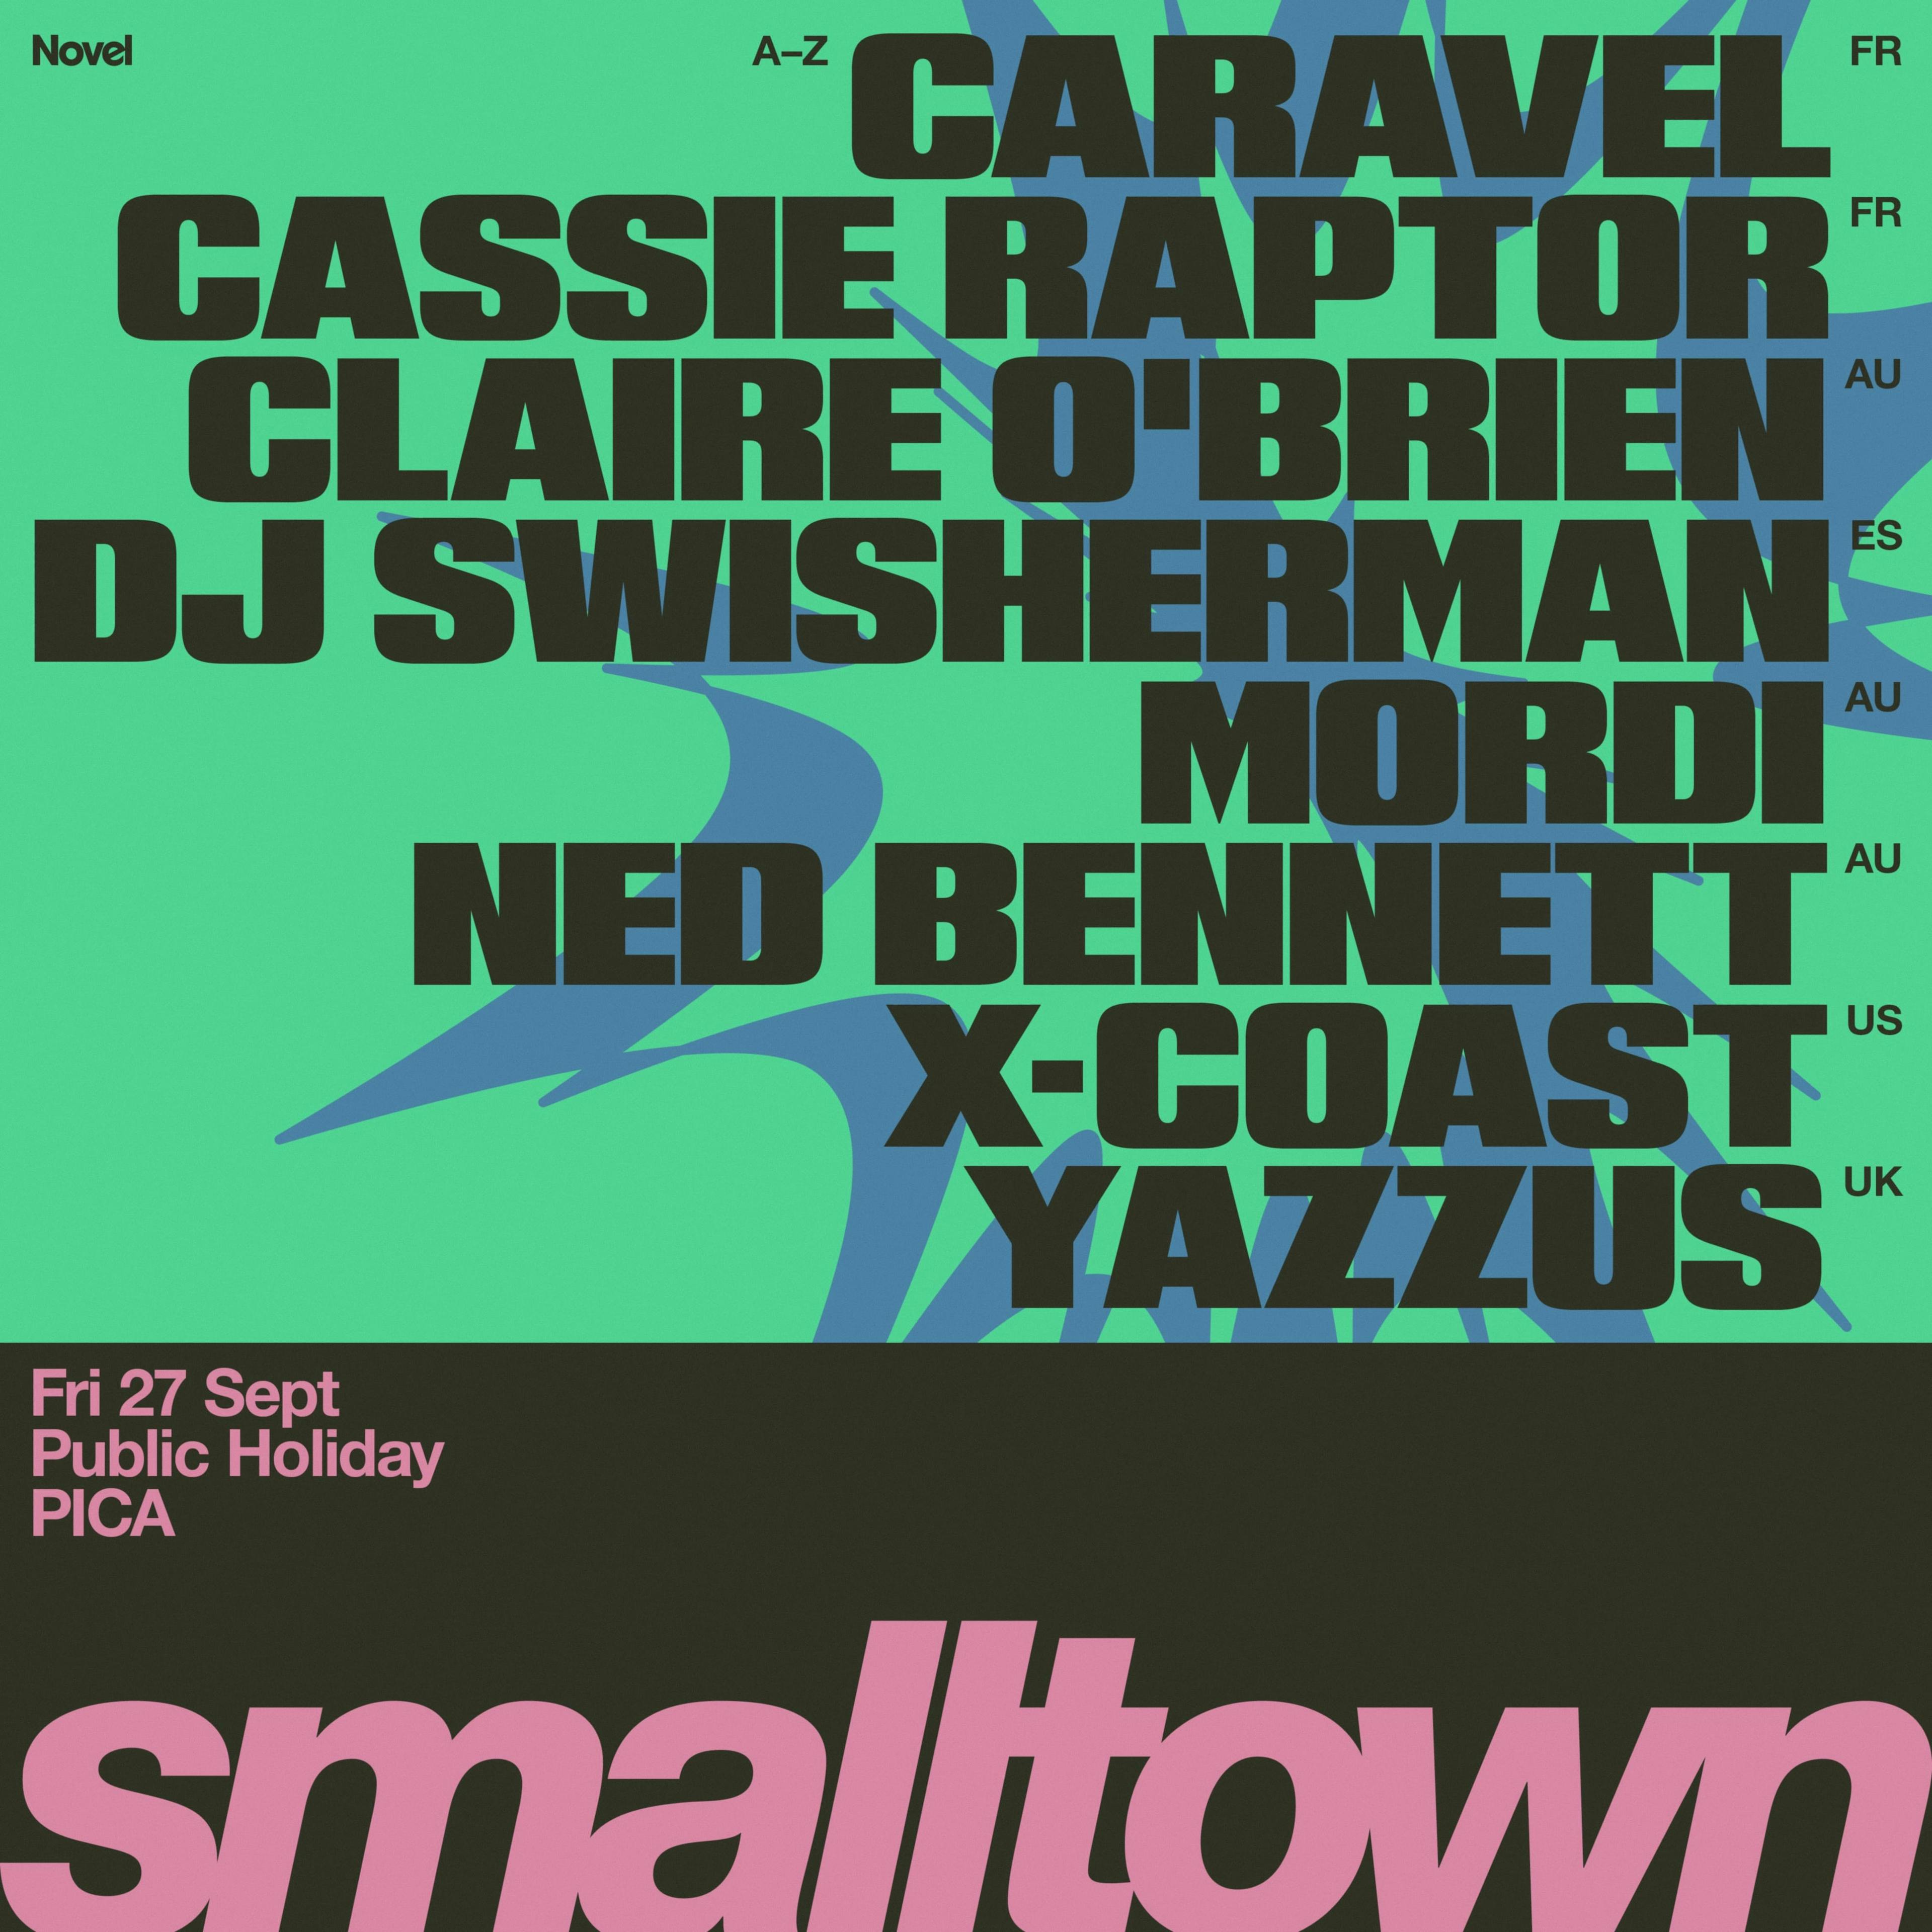 smalltown with CARAVEL, Cassie Raptor, DJ Swisherman, X-Coast, Yazzus + more - Fri 27 Sept (Public Holiday) 